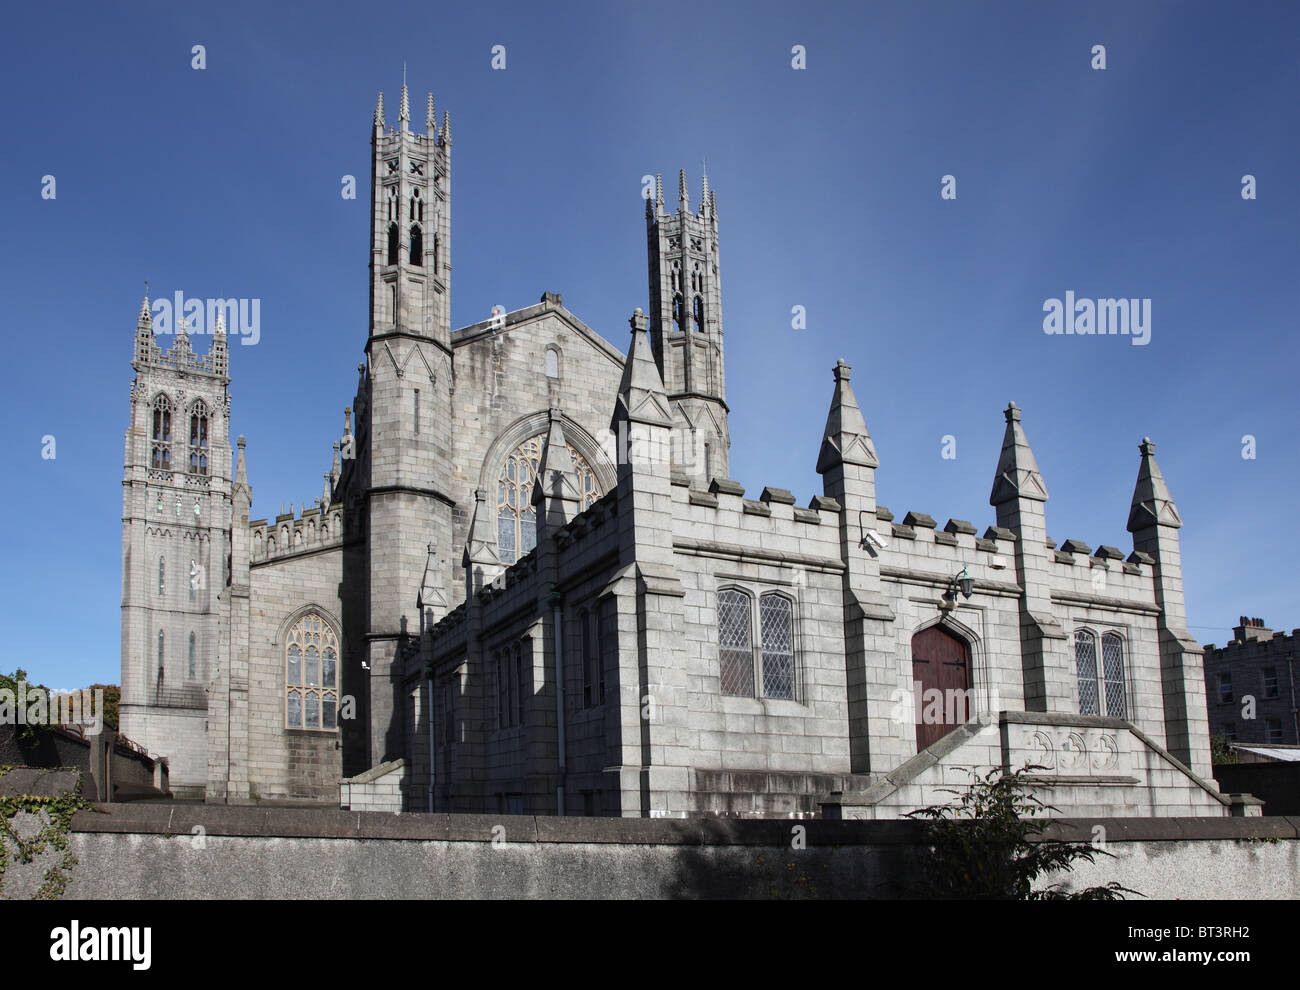 La Catedral de St Patrick, 1847 catedral de estilo gótico, en Dundalk, Co Louth, Ulster, Irlanda Foto de stock